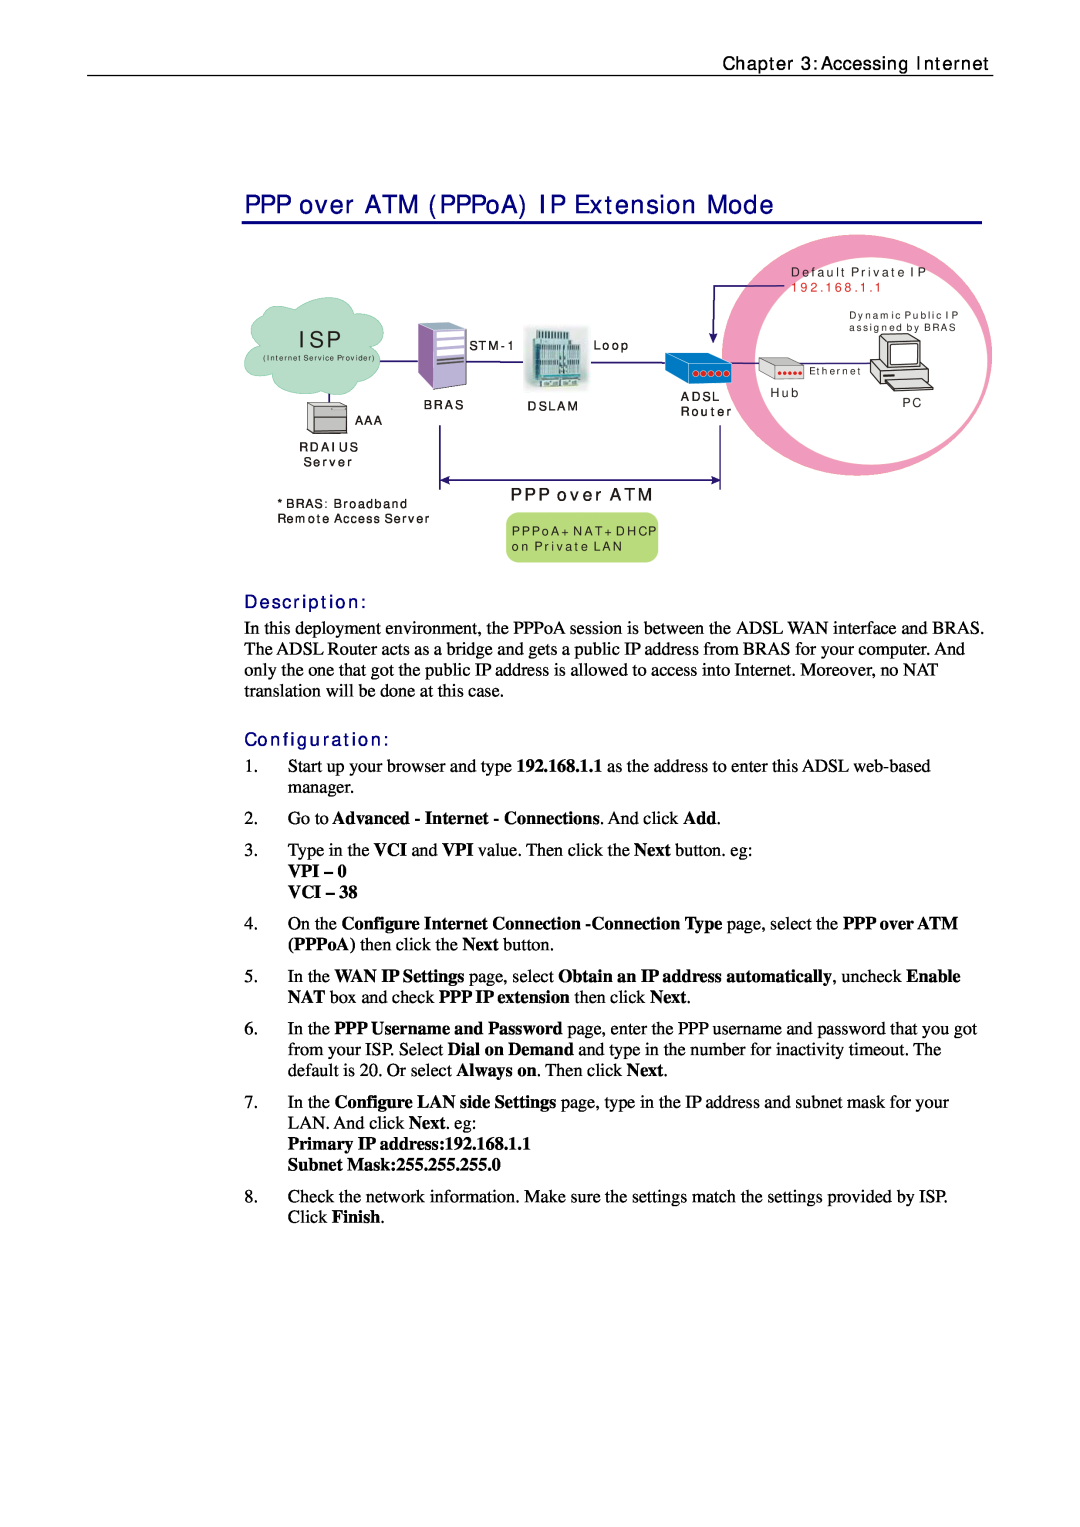 Siemens CL-010-I manual PPP over ATM PPPoA IP Extension Mode, Description, Configuration, VPI - 0 VCI 